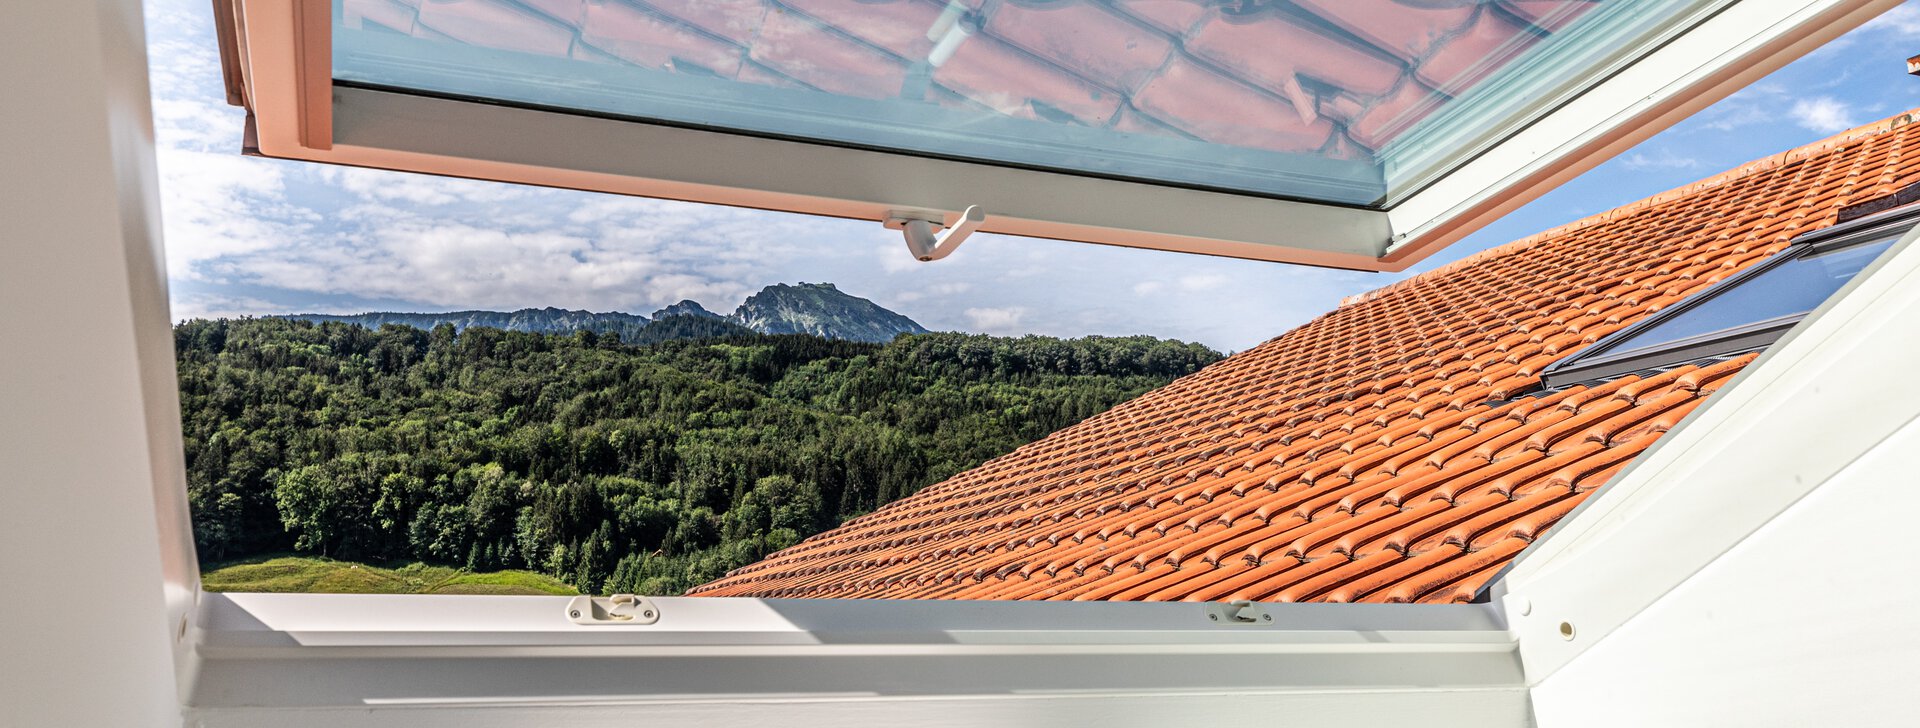 Ausblick Dachgeschosswohnung in Bergen, Immobilie kaufen, Bergen | © HausBauHaus GmbH